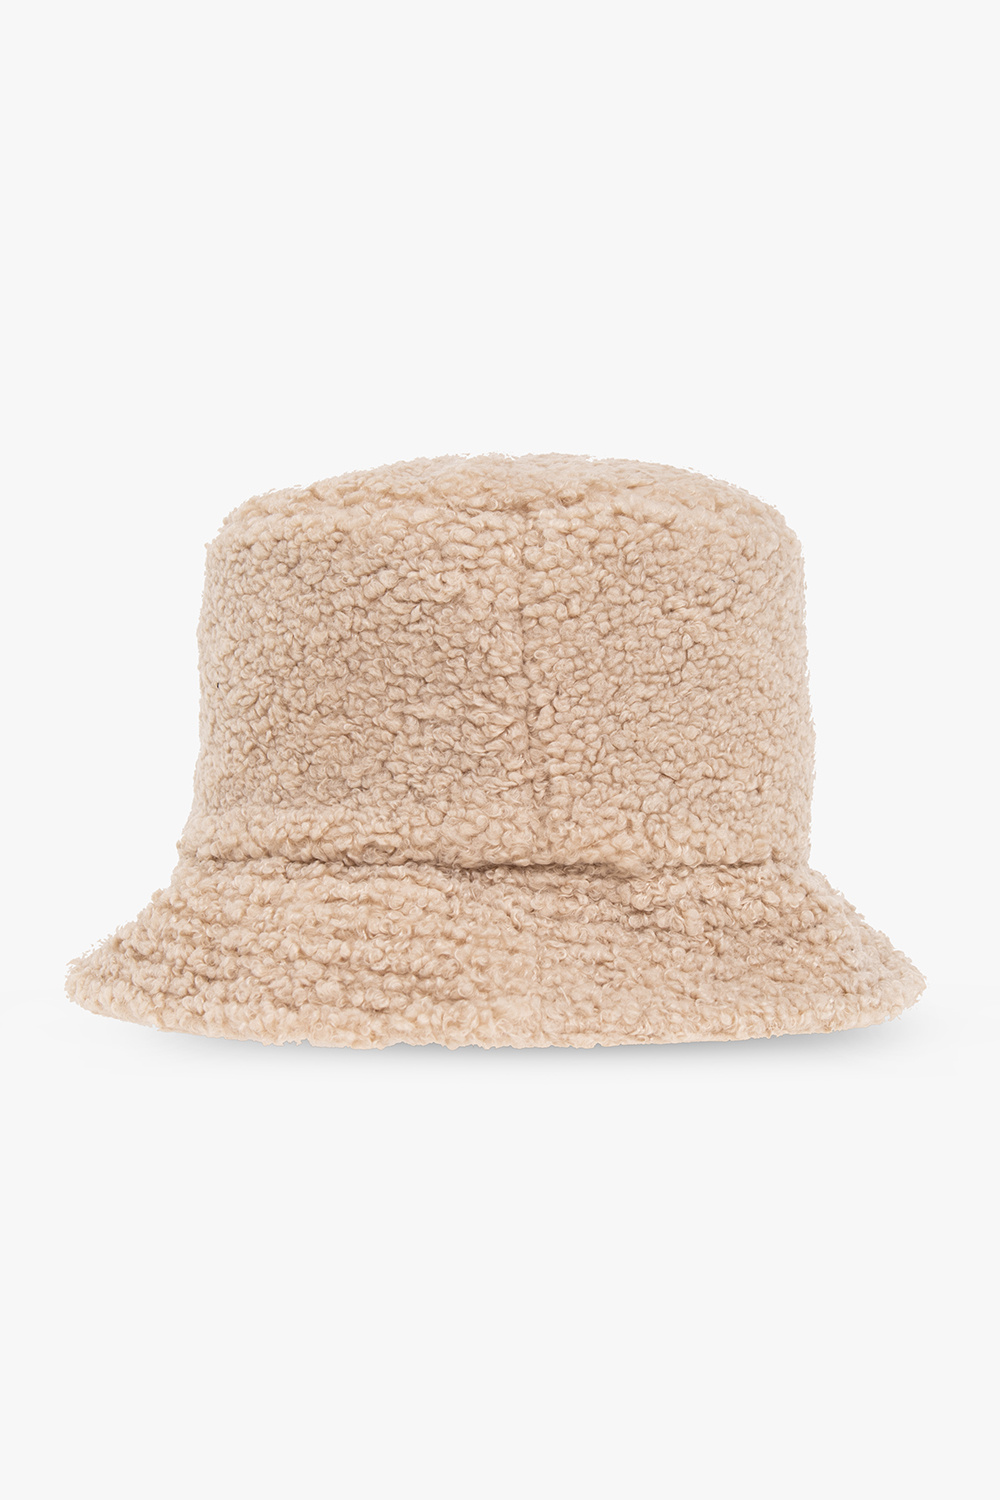 Iro Fur bucket adjustable hat